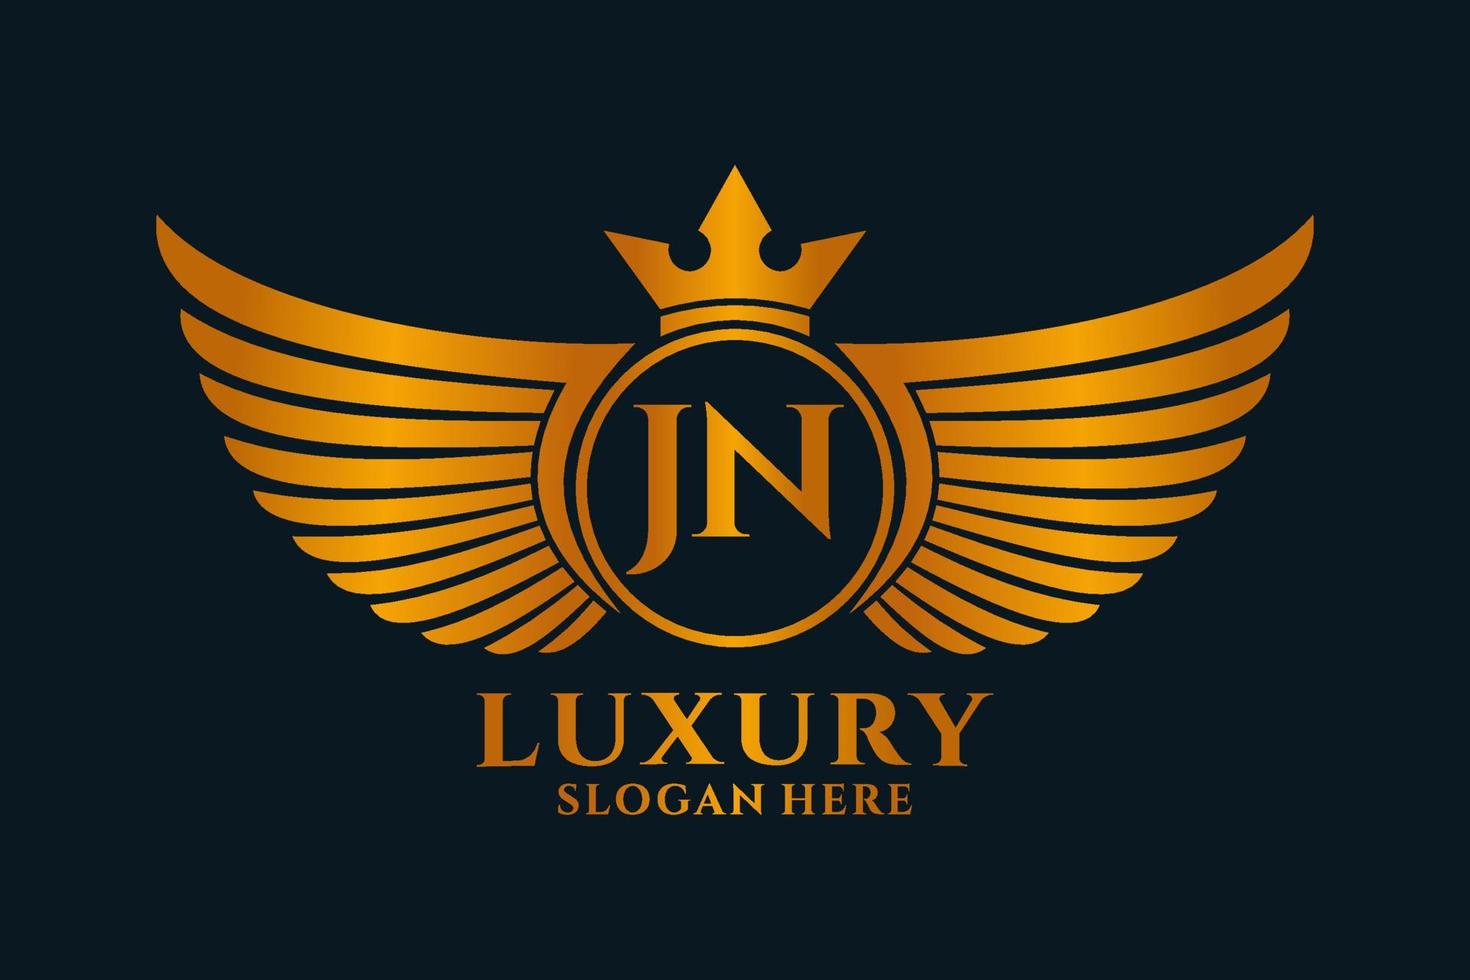 luxe Koninklijk vleugel brief jn kam goud kleur logo vector, zege logo, kam logo, vleugel logo, vector logo sjabloon.